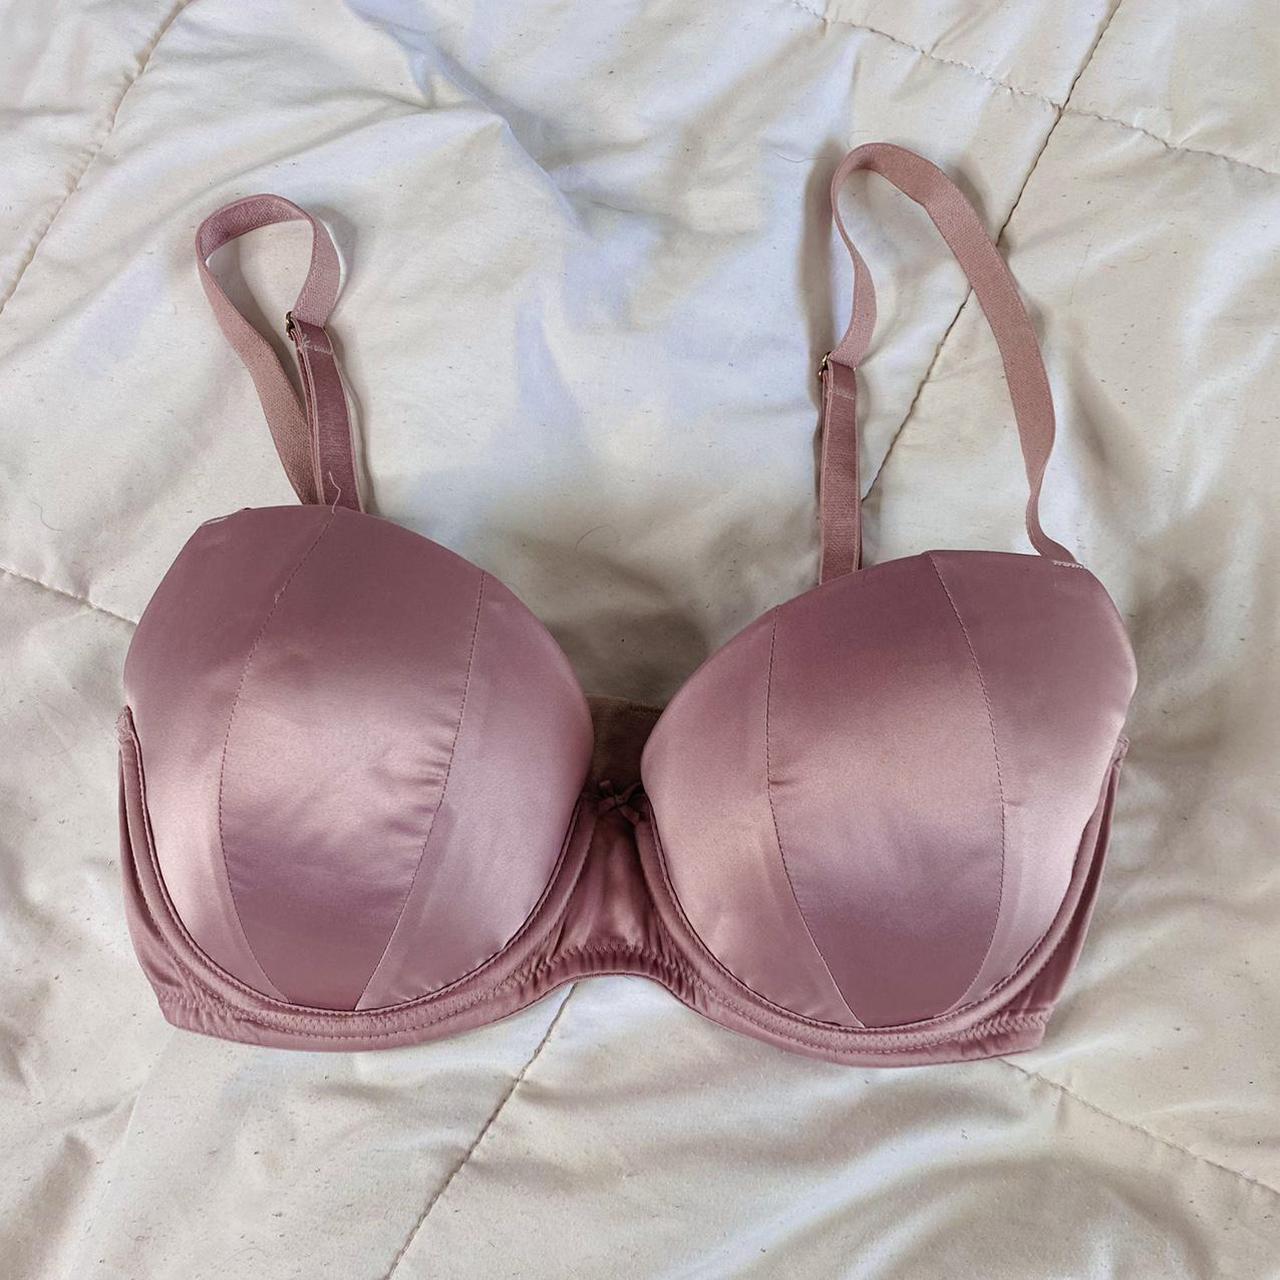 victoria’s secret dusty pink bra. 32DDD. lined.